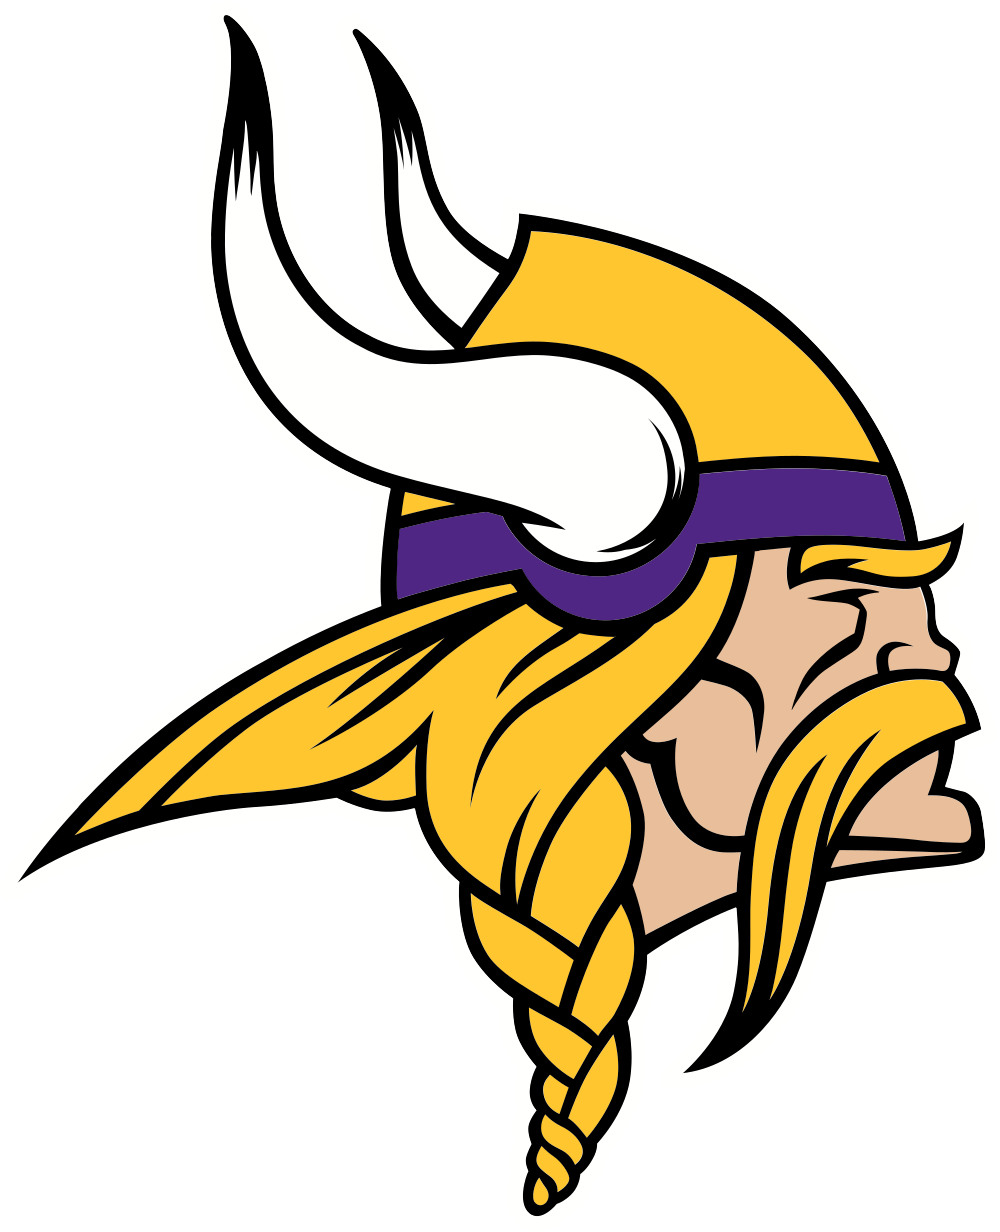 Minnesota Vikings logo png transparent